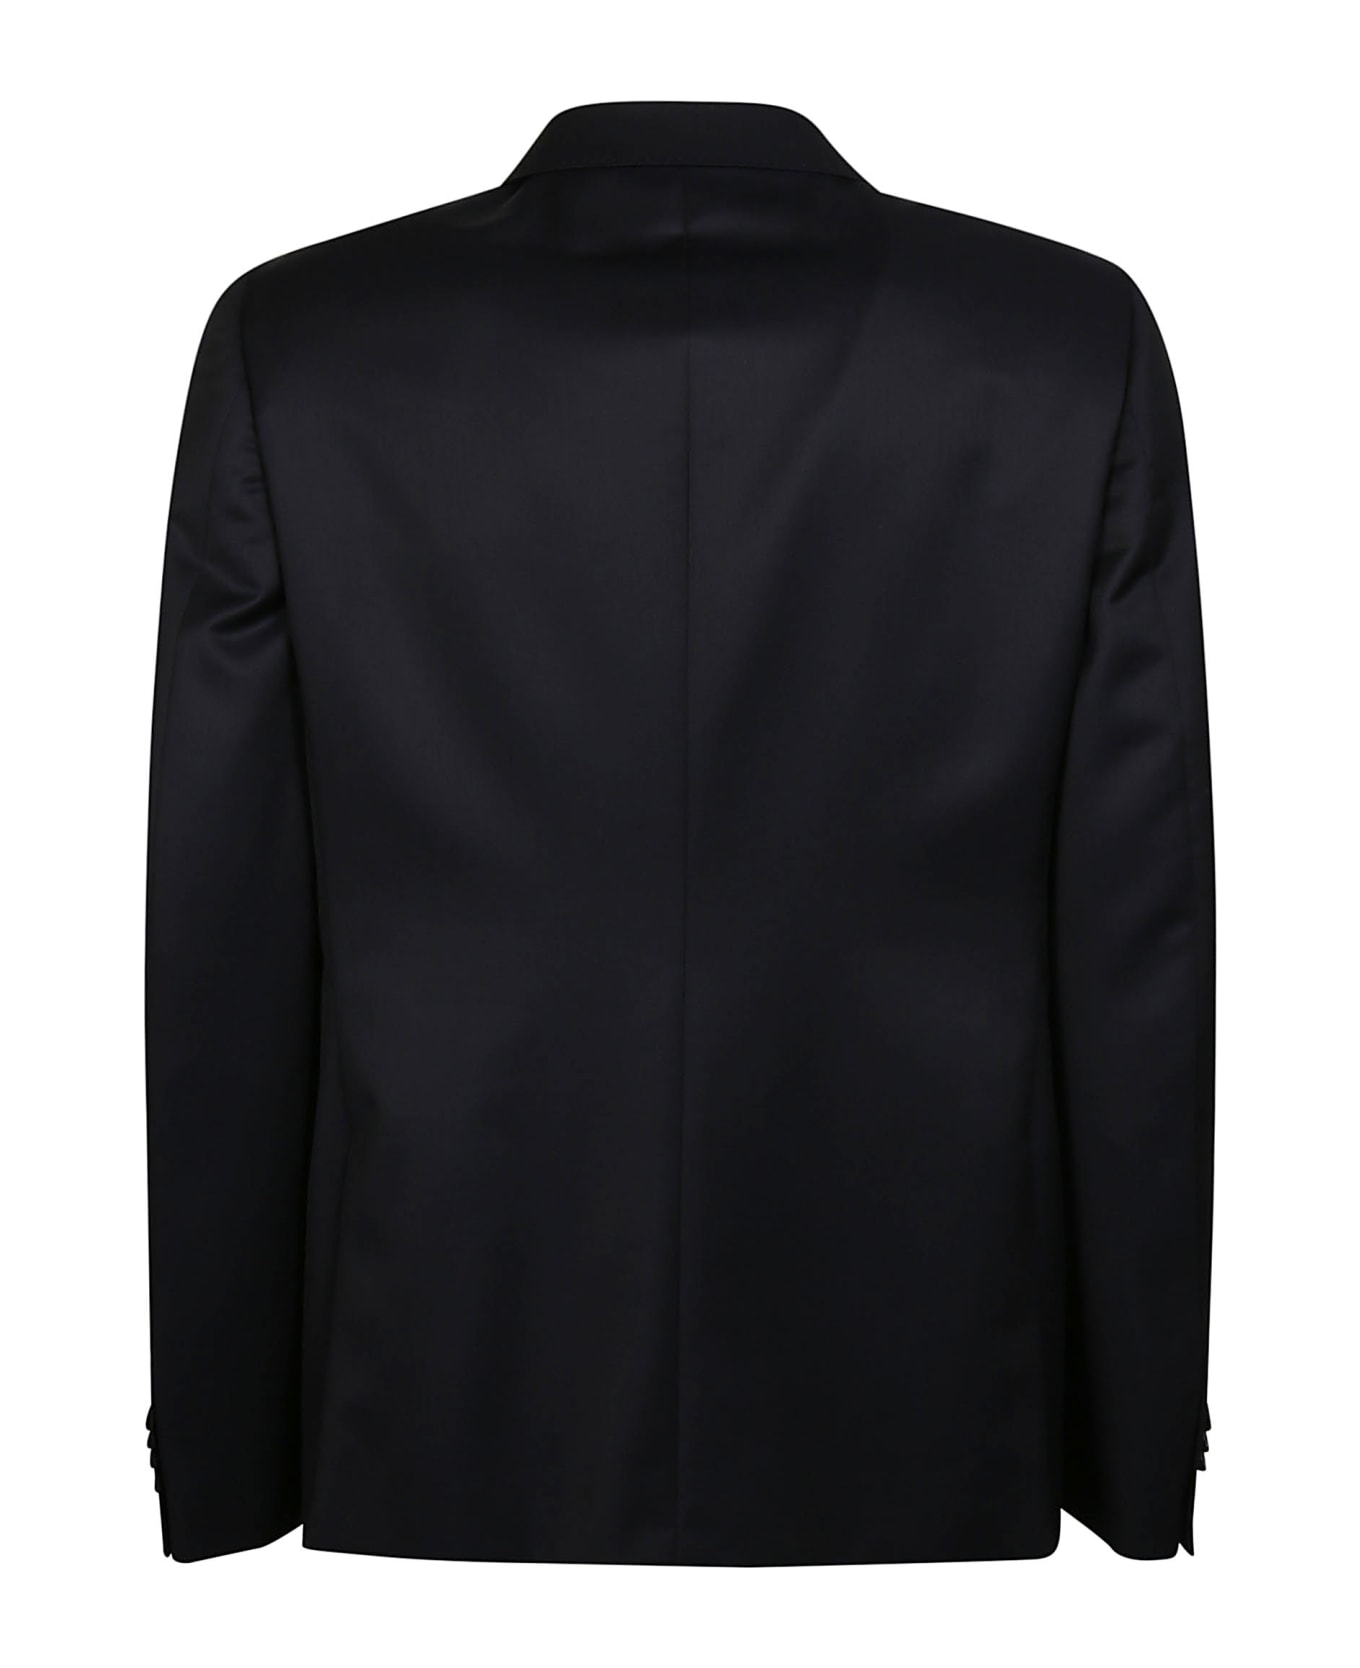 Zegna Luxury Tailoring Suit - Blu スーツ